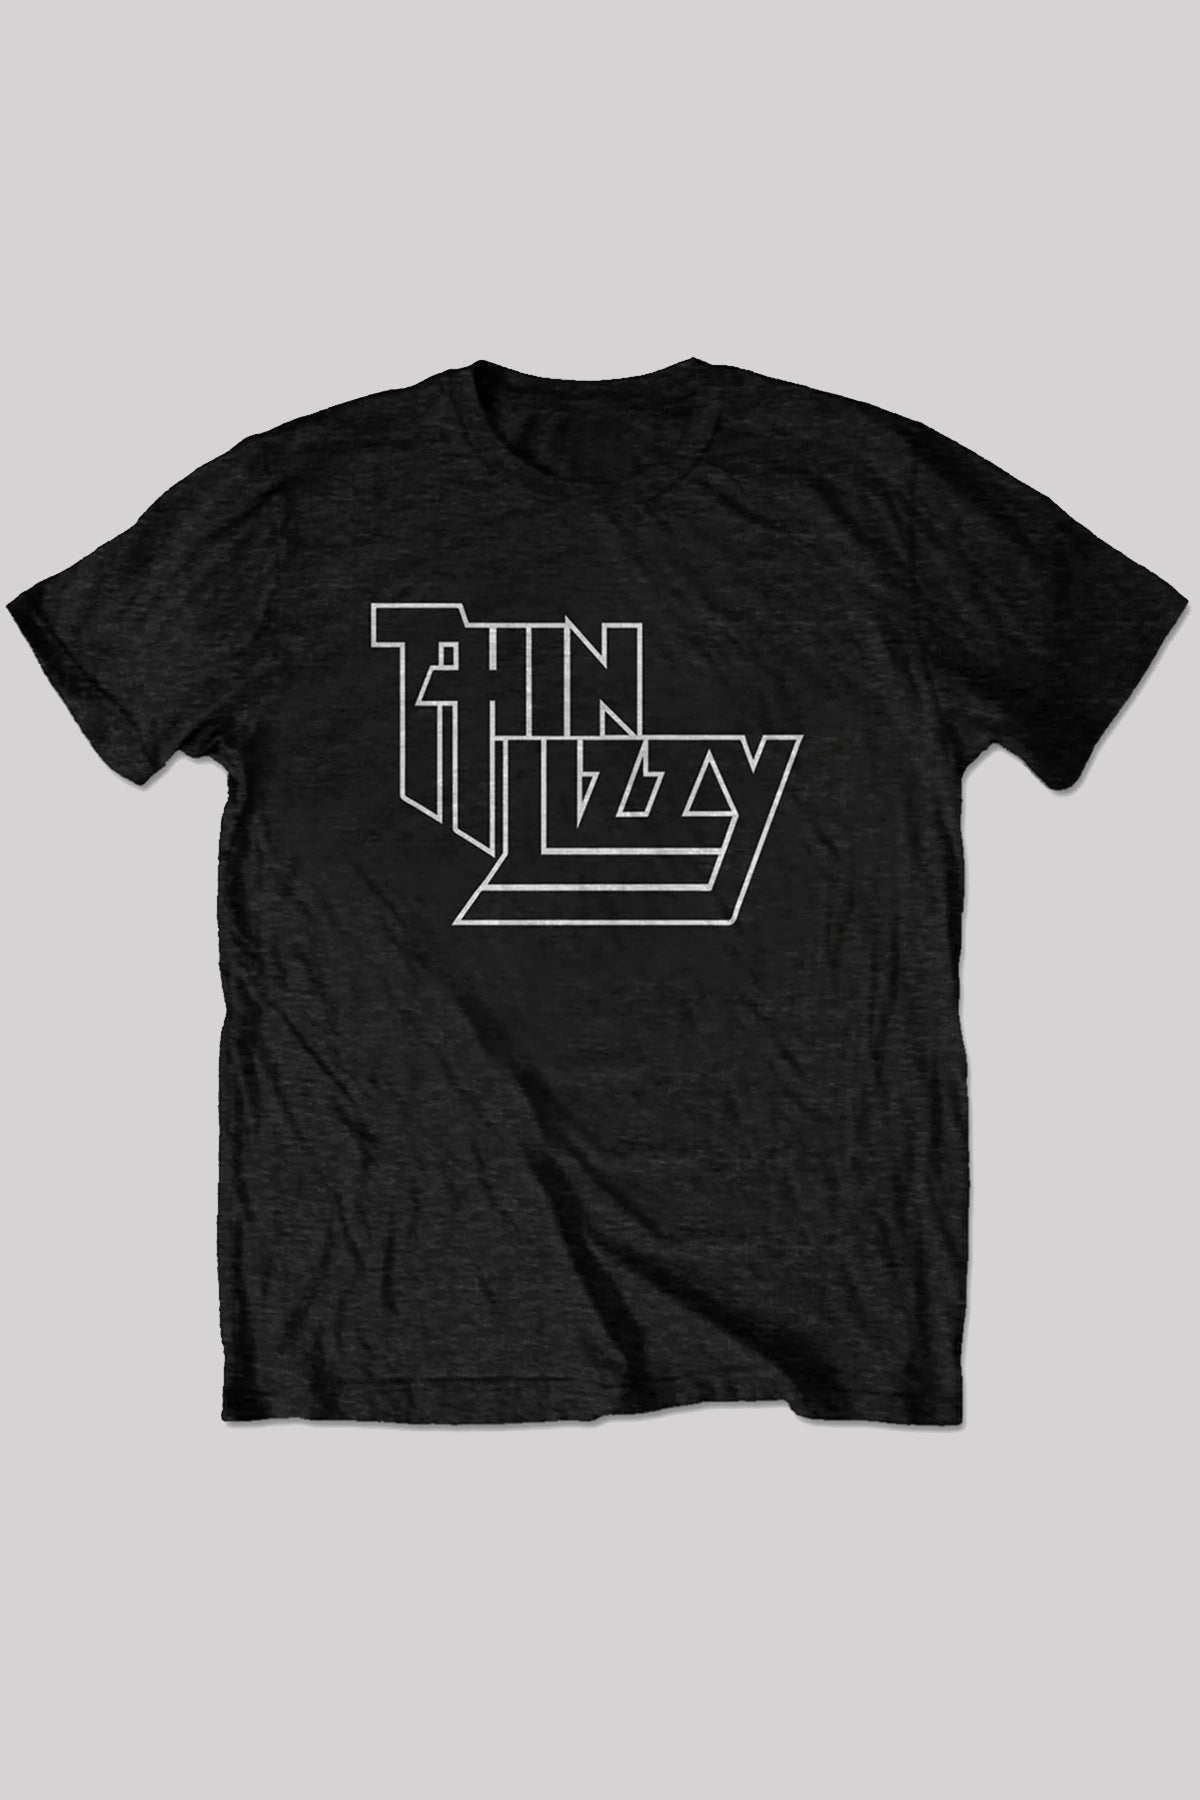 Thin Lizzy Logo Band Rock T-Shirt | Ro Rox Boutique | Ro Rox